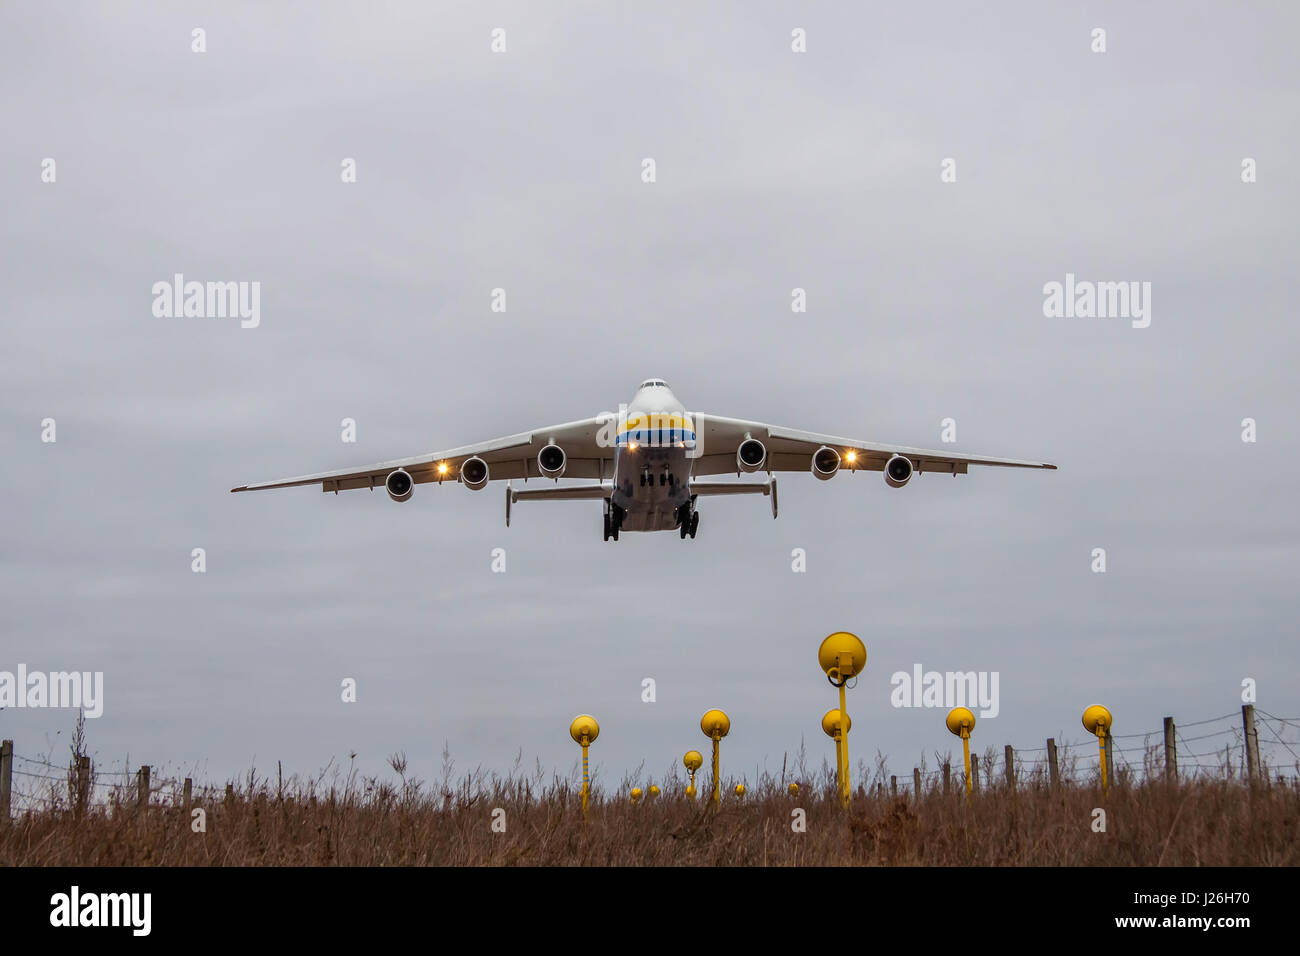 Kiev Region, Ukraine - January 8, 2012: Antonov An-225 Mriya cargo plane is on finallanding at dusk in the airport Stock Photo